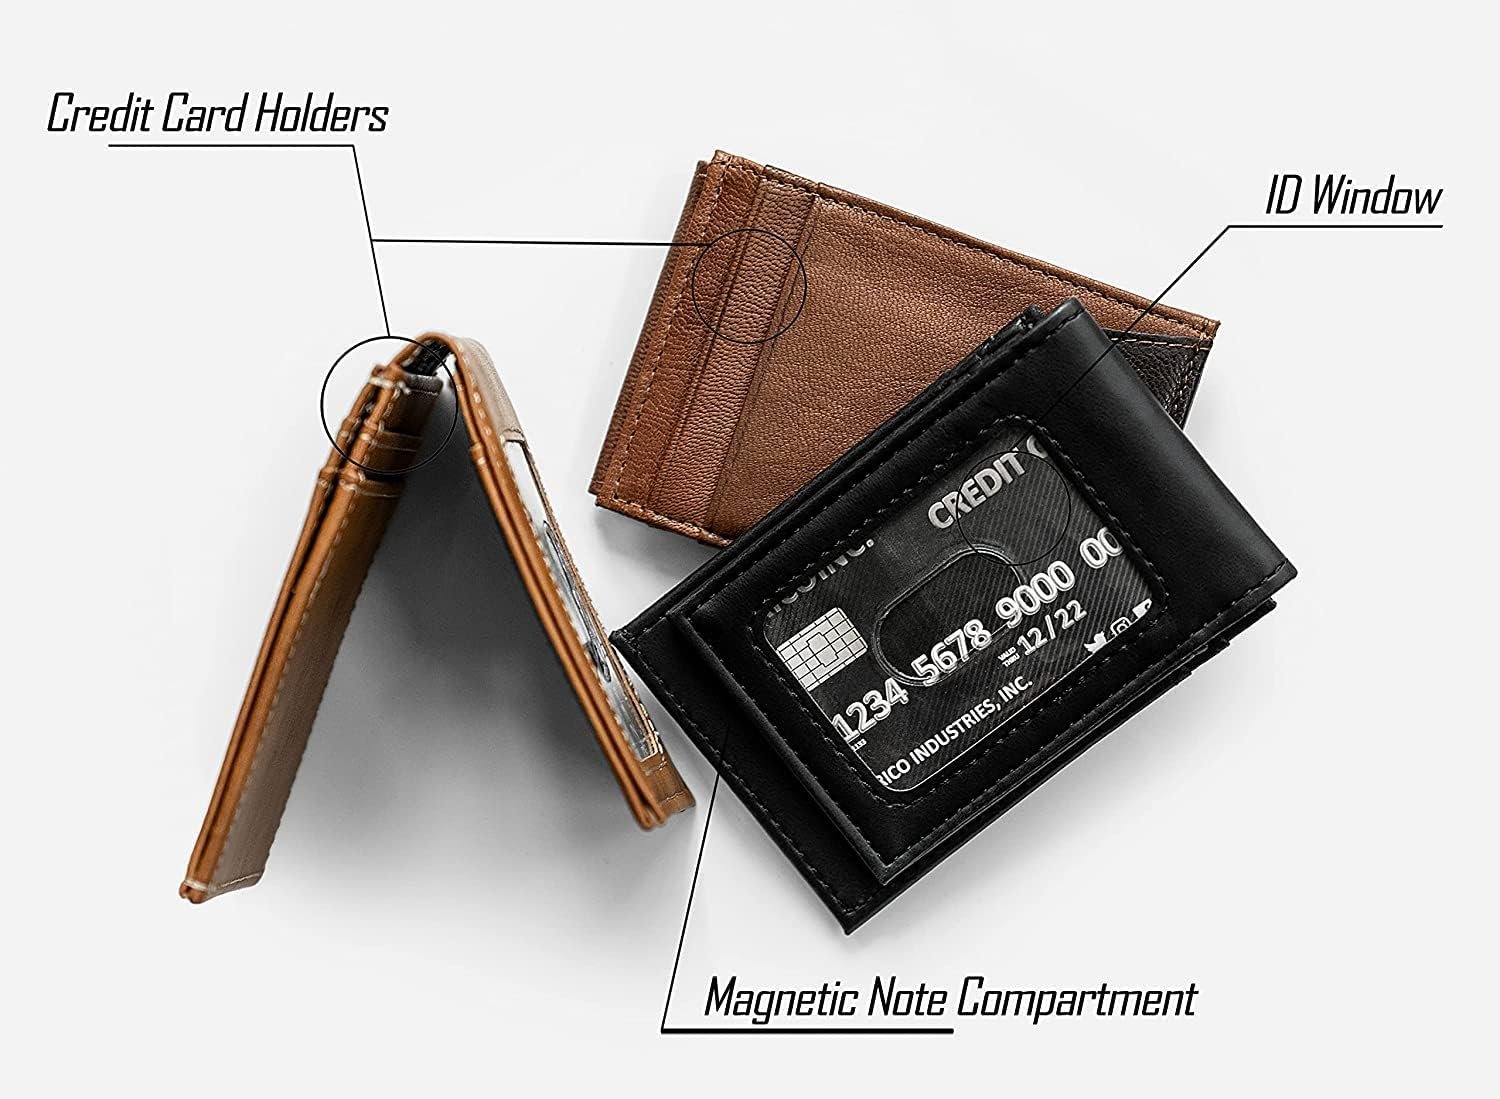 Texas Tech University Red Raiders Premium Brown Leather Wallet, Front Pocket Magnetic Money Clip, Laser Engraved, Vegan